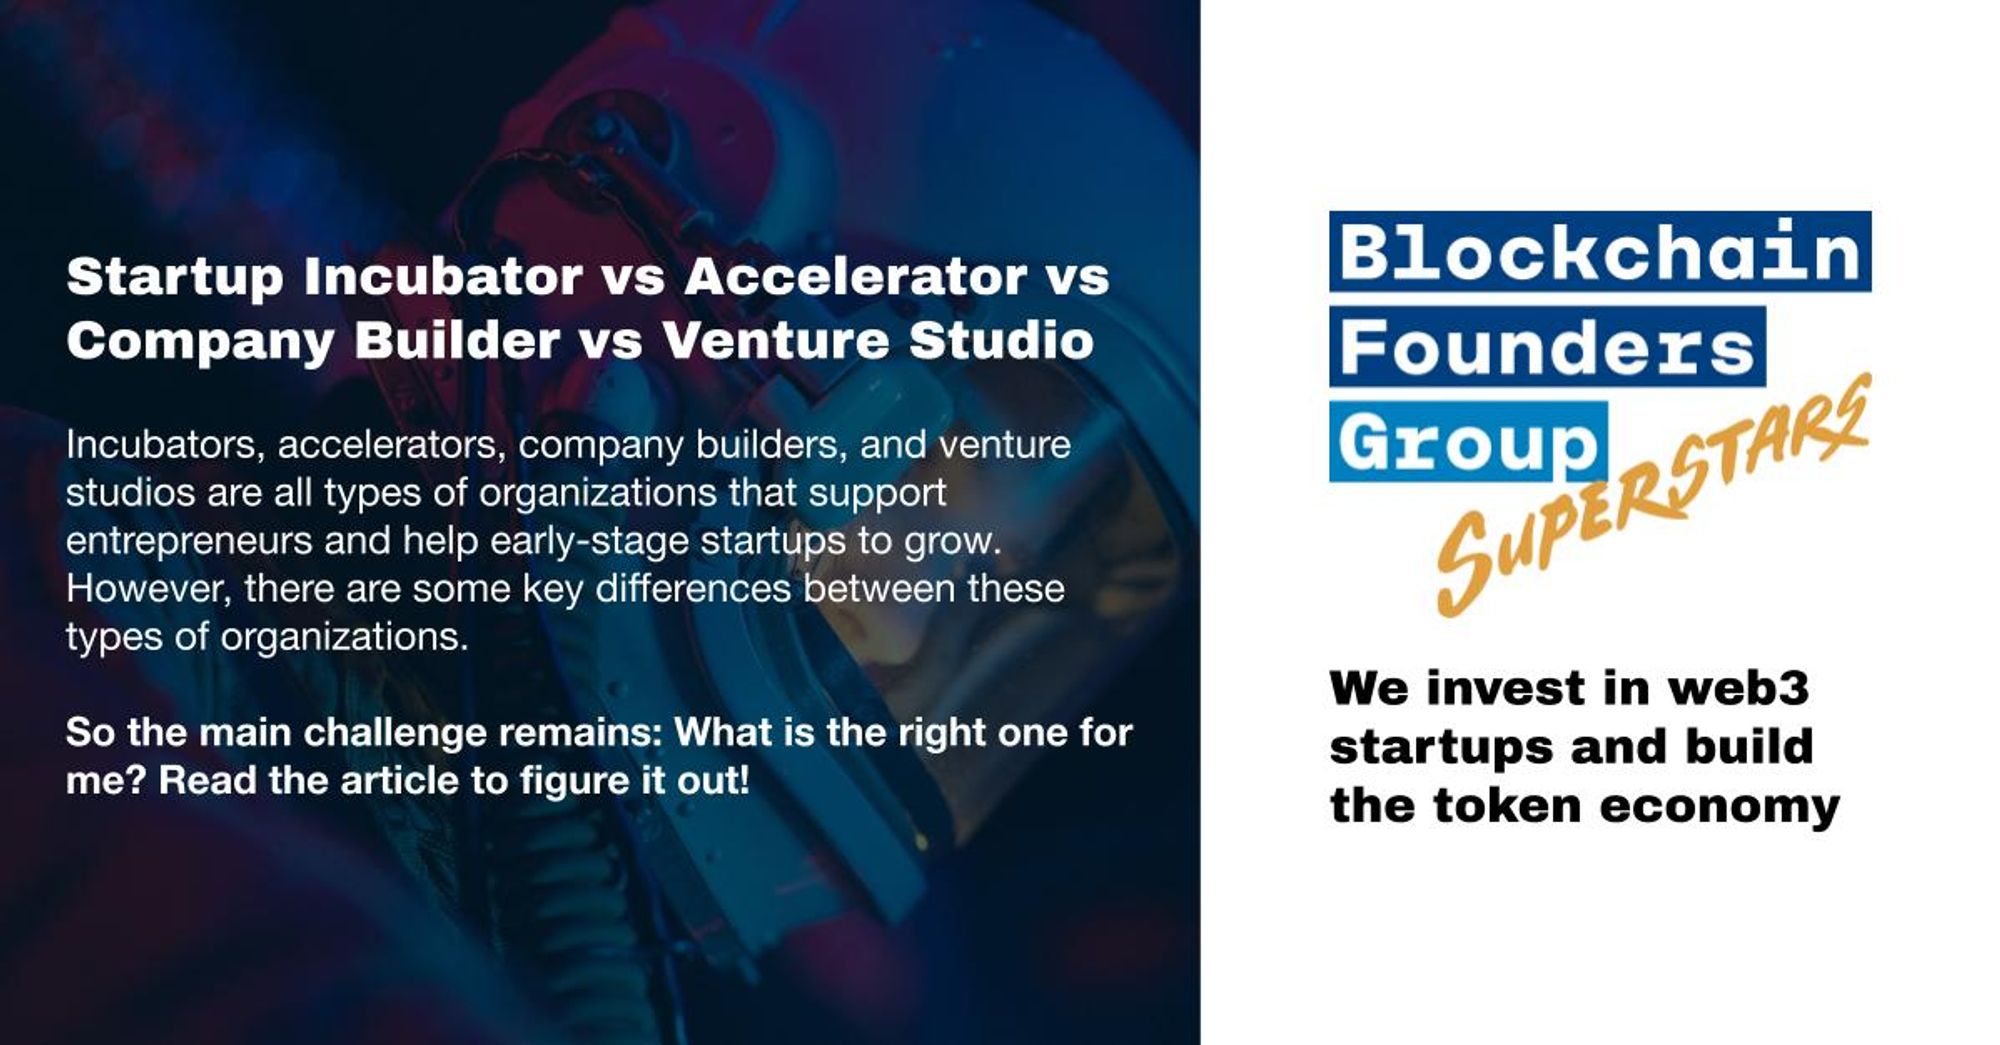 Startup Incubator vs Accelerator vs Company Builder vs Venture Studio - what is the right one for me?